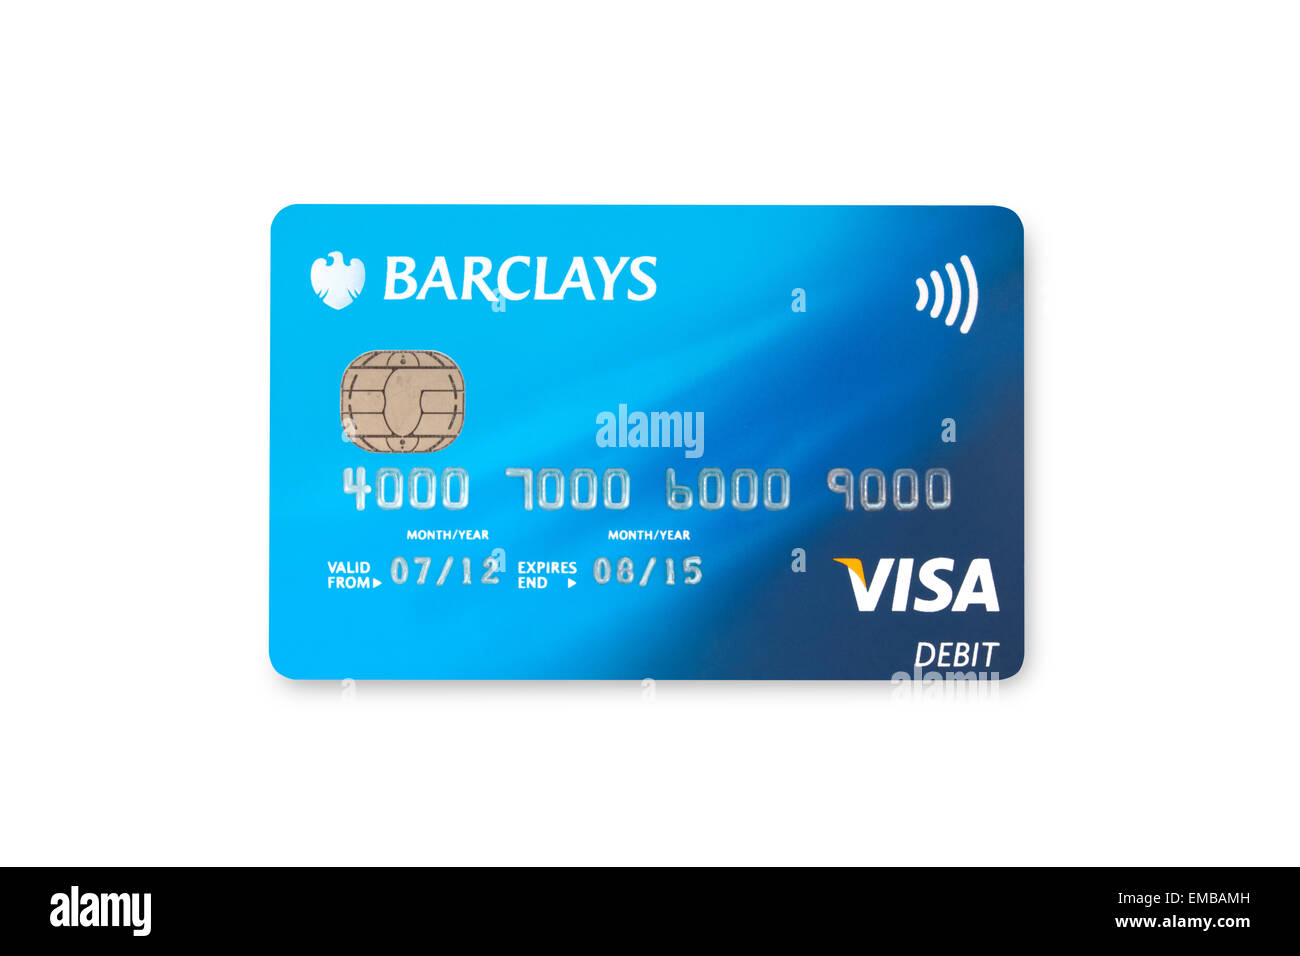 Barclays card -Fotos und -Bildmaterial in hoher Auflösung – Alamy